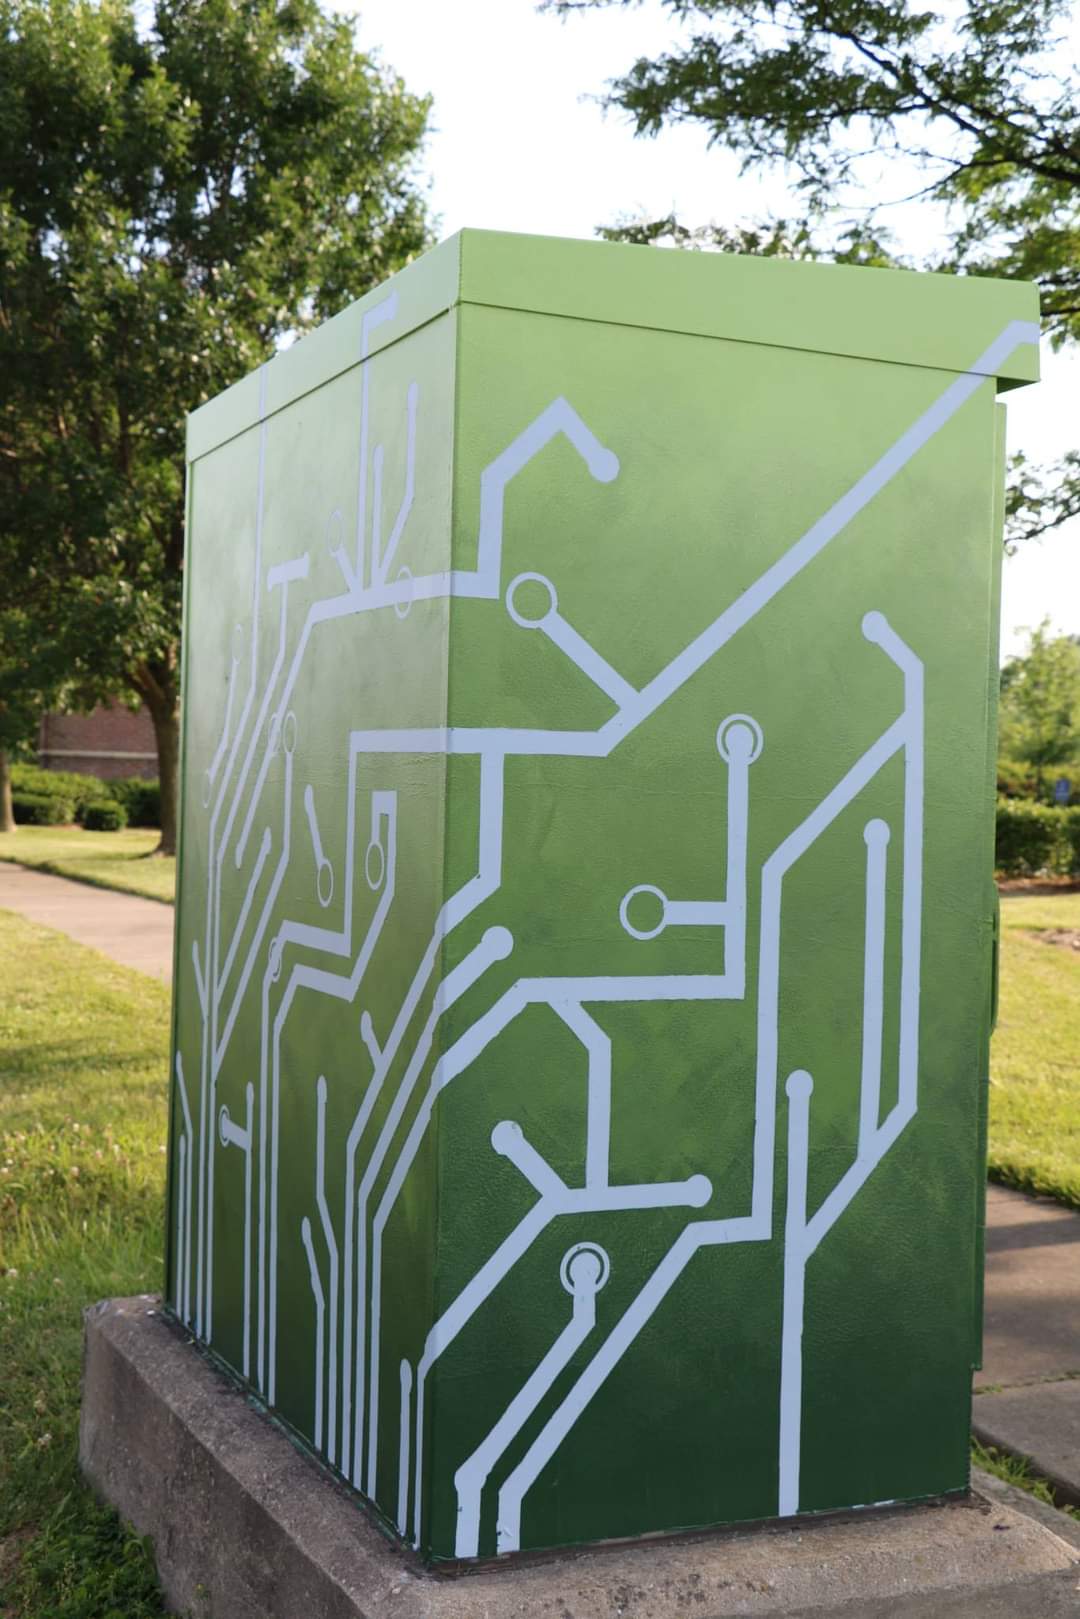 Momentum: beautified steel electrical utility power box mural